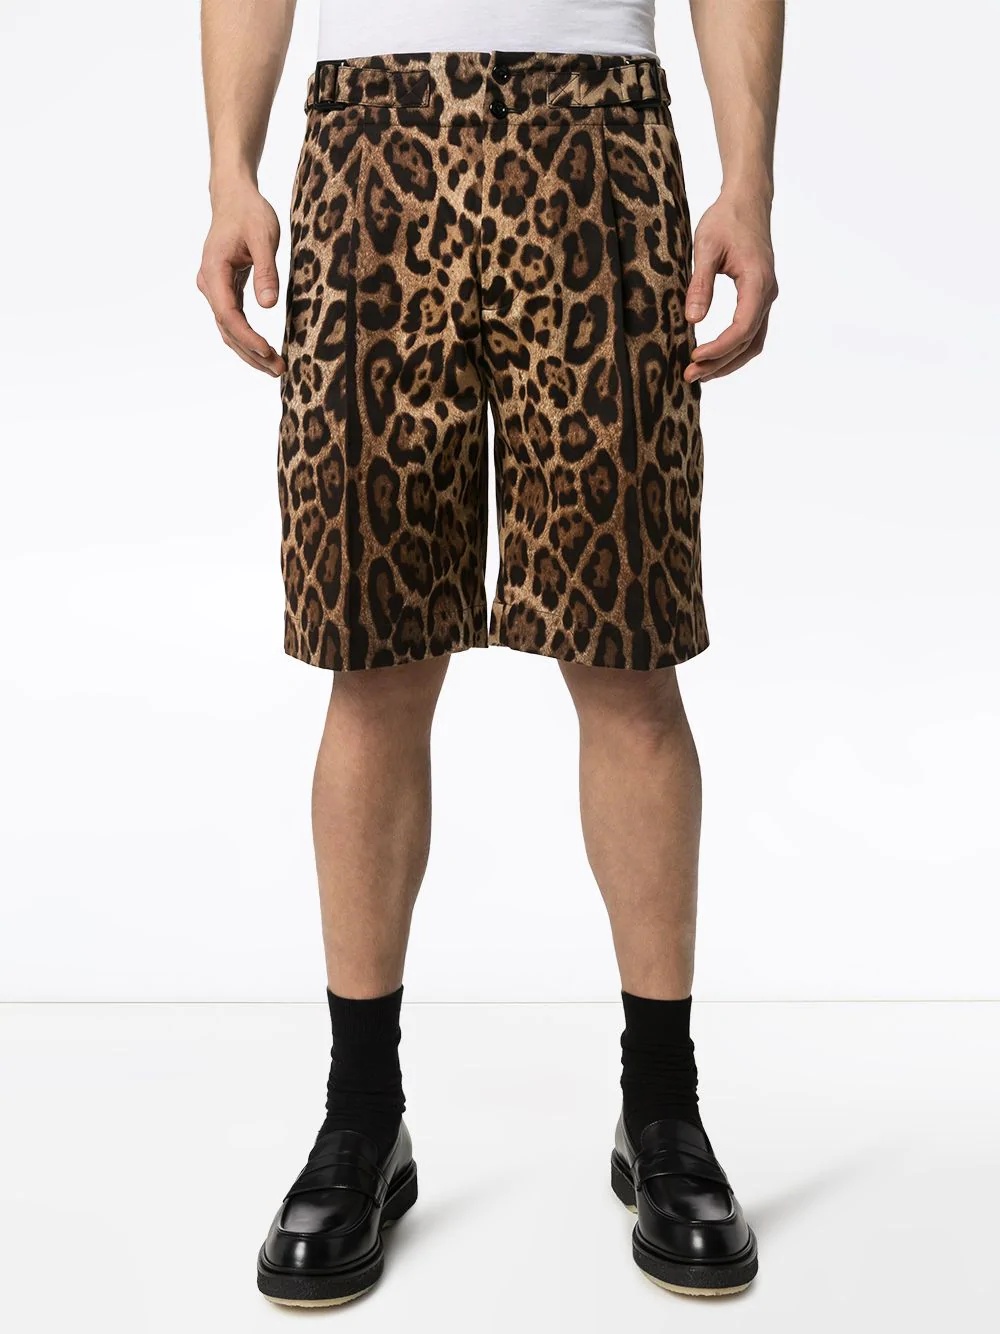 leopard-print bermuda shorts - 3